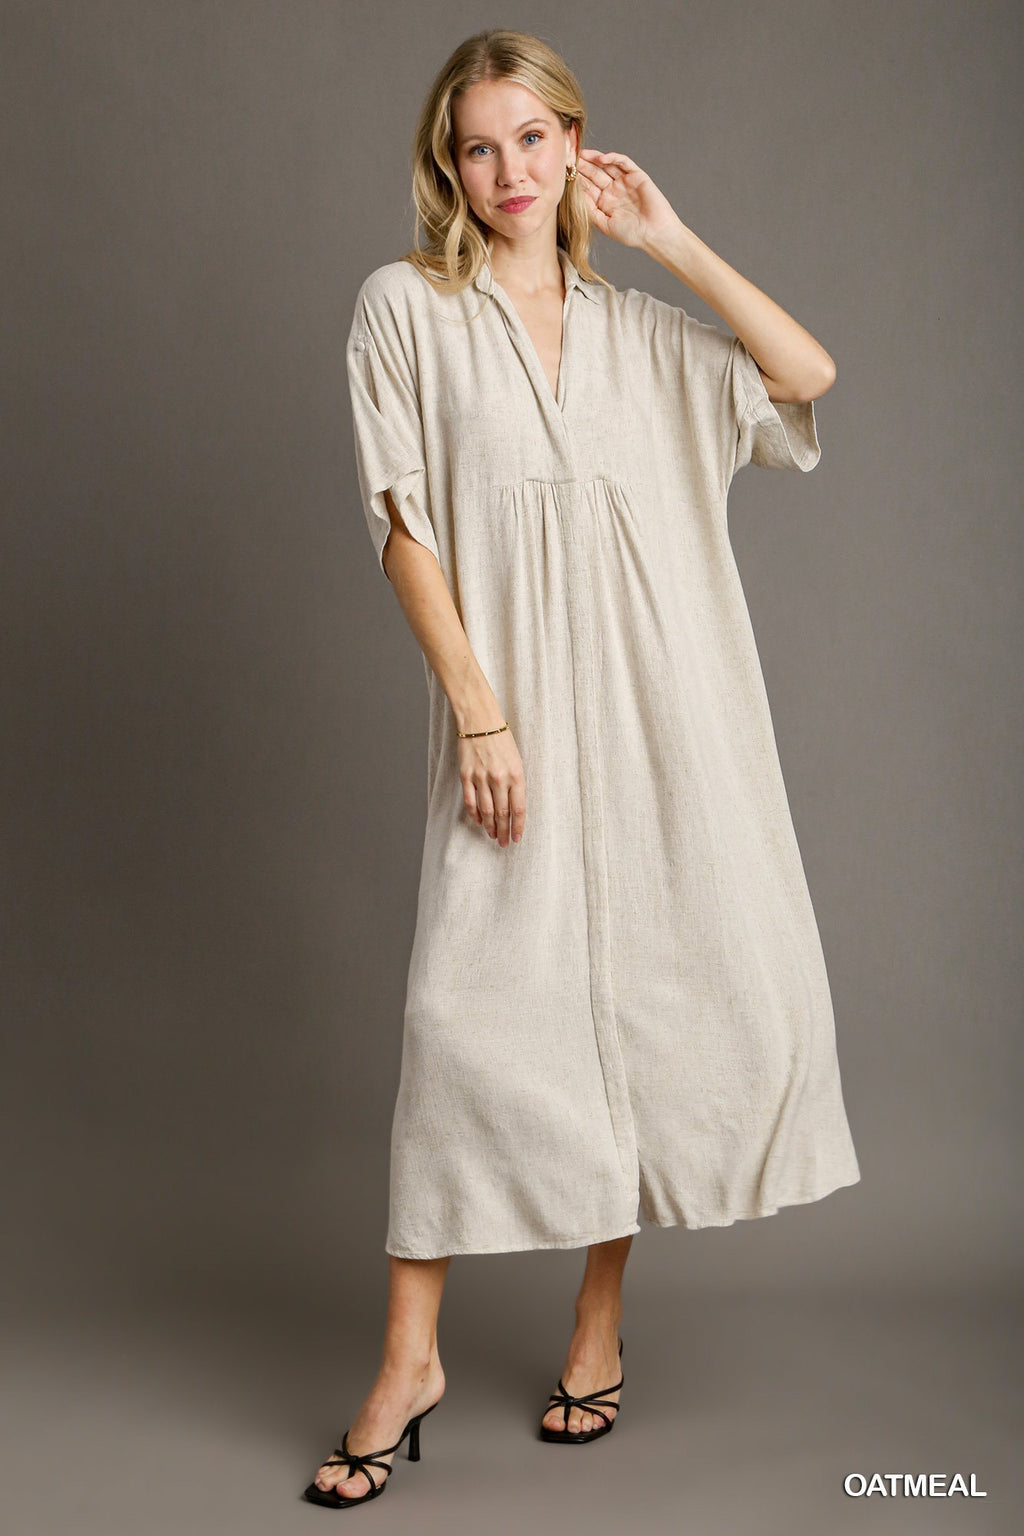 "Addsion" Linen Dress